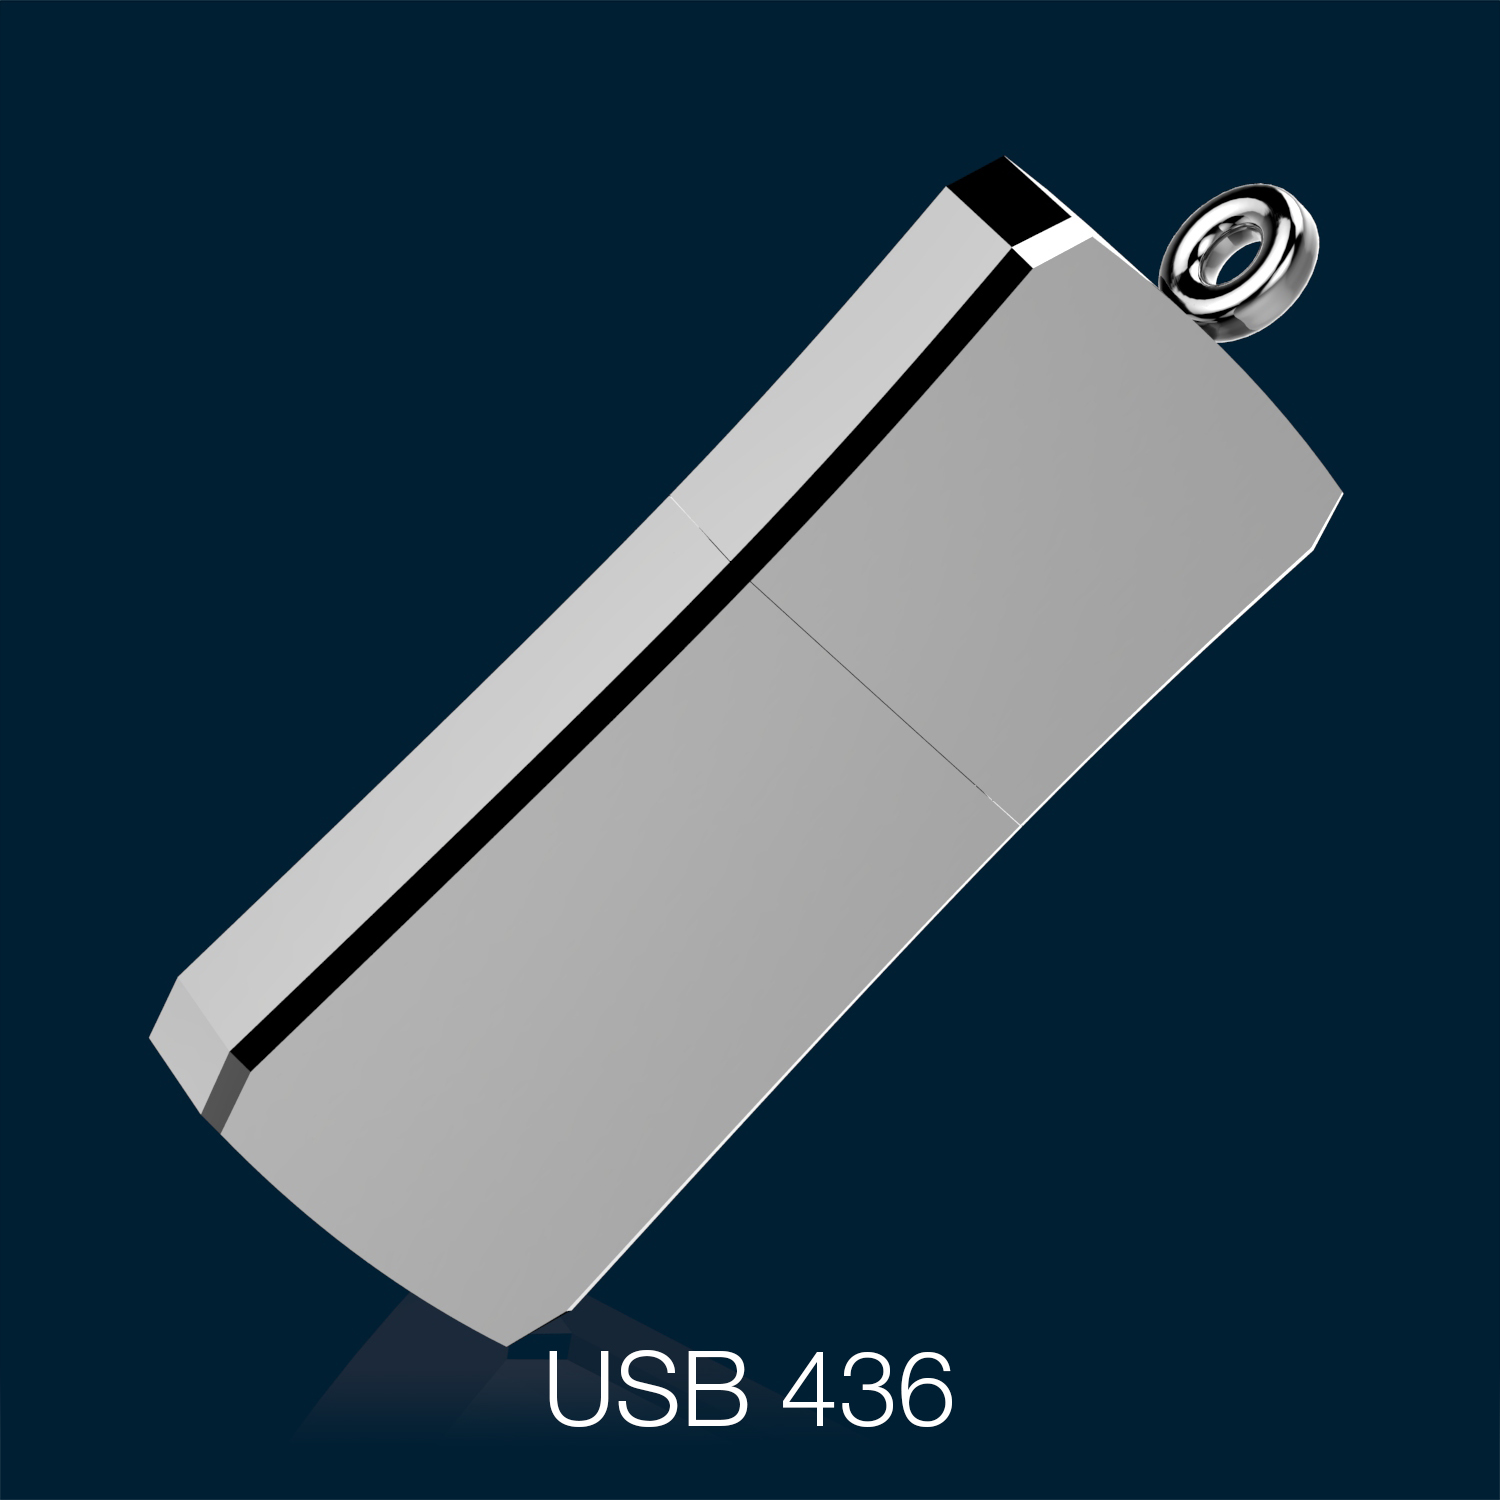 USB 436